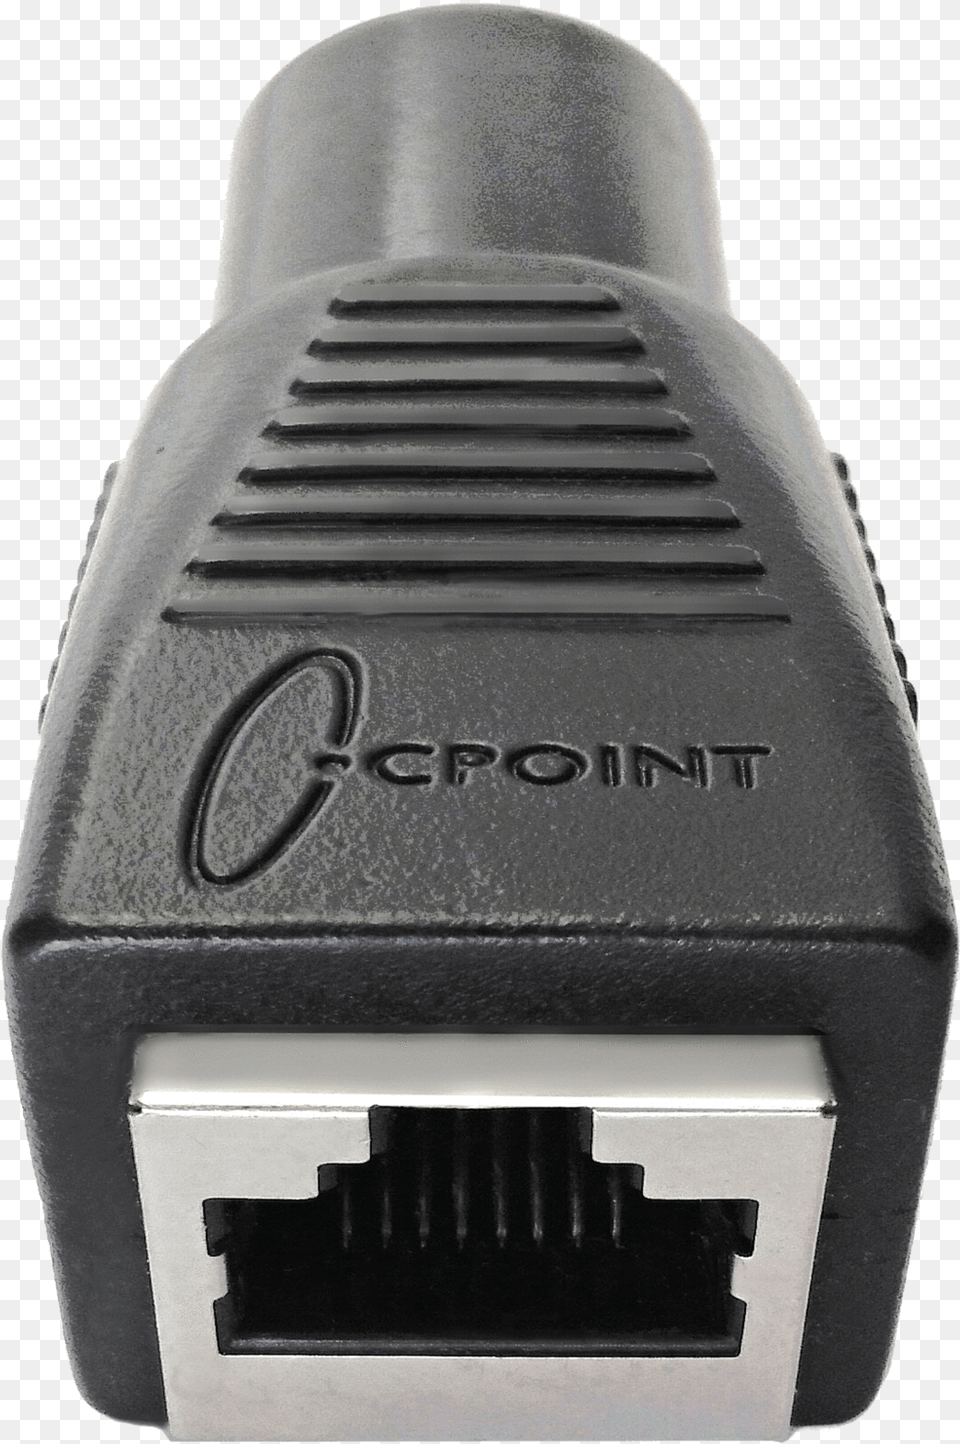 C Point Xlrj45 5 Pin Dmx To Rj45 Adapterclass, Adapter, Electronics, Plug, Mailbox Free Png Download